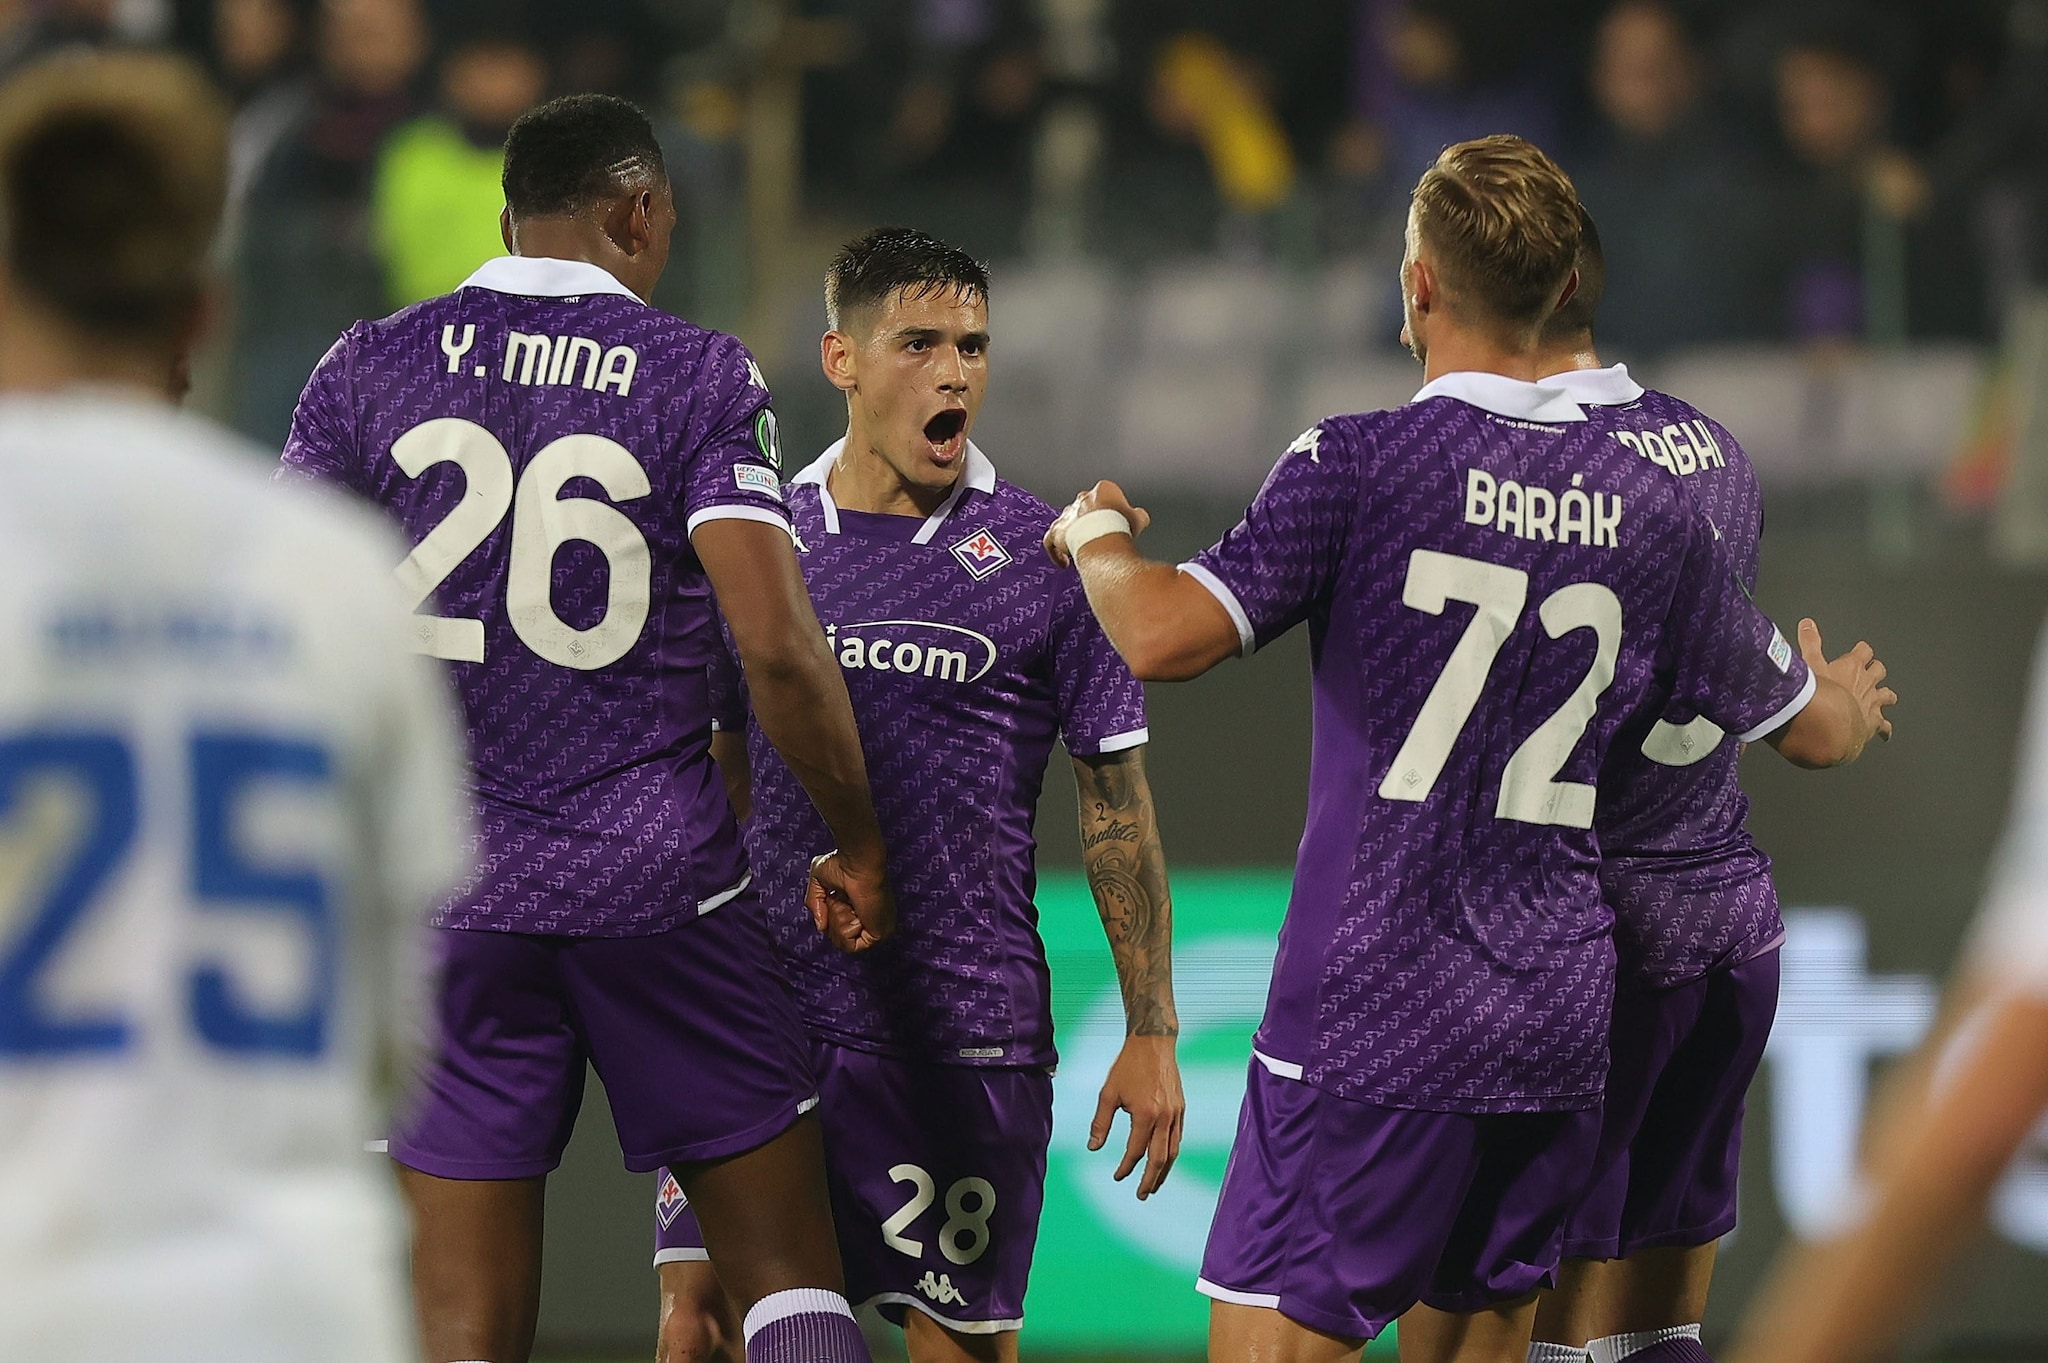 Martinez Quarta pareggia i conti tra Fiorentina e Genk